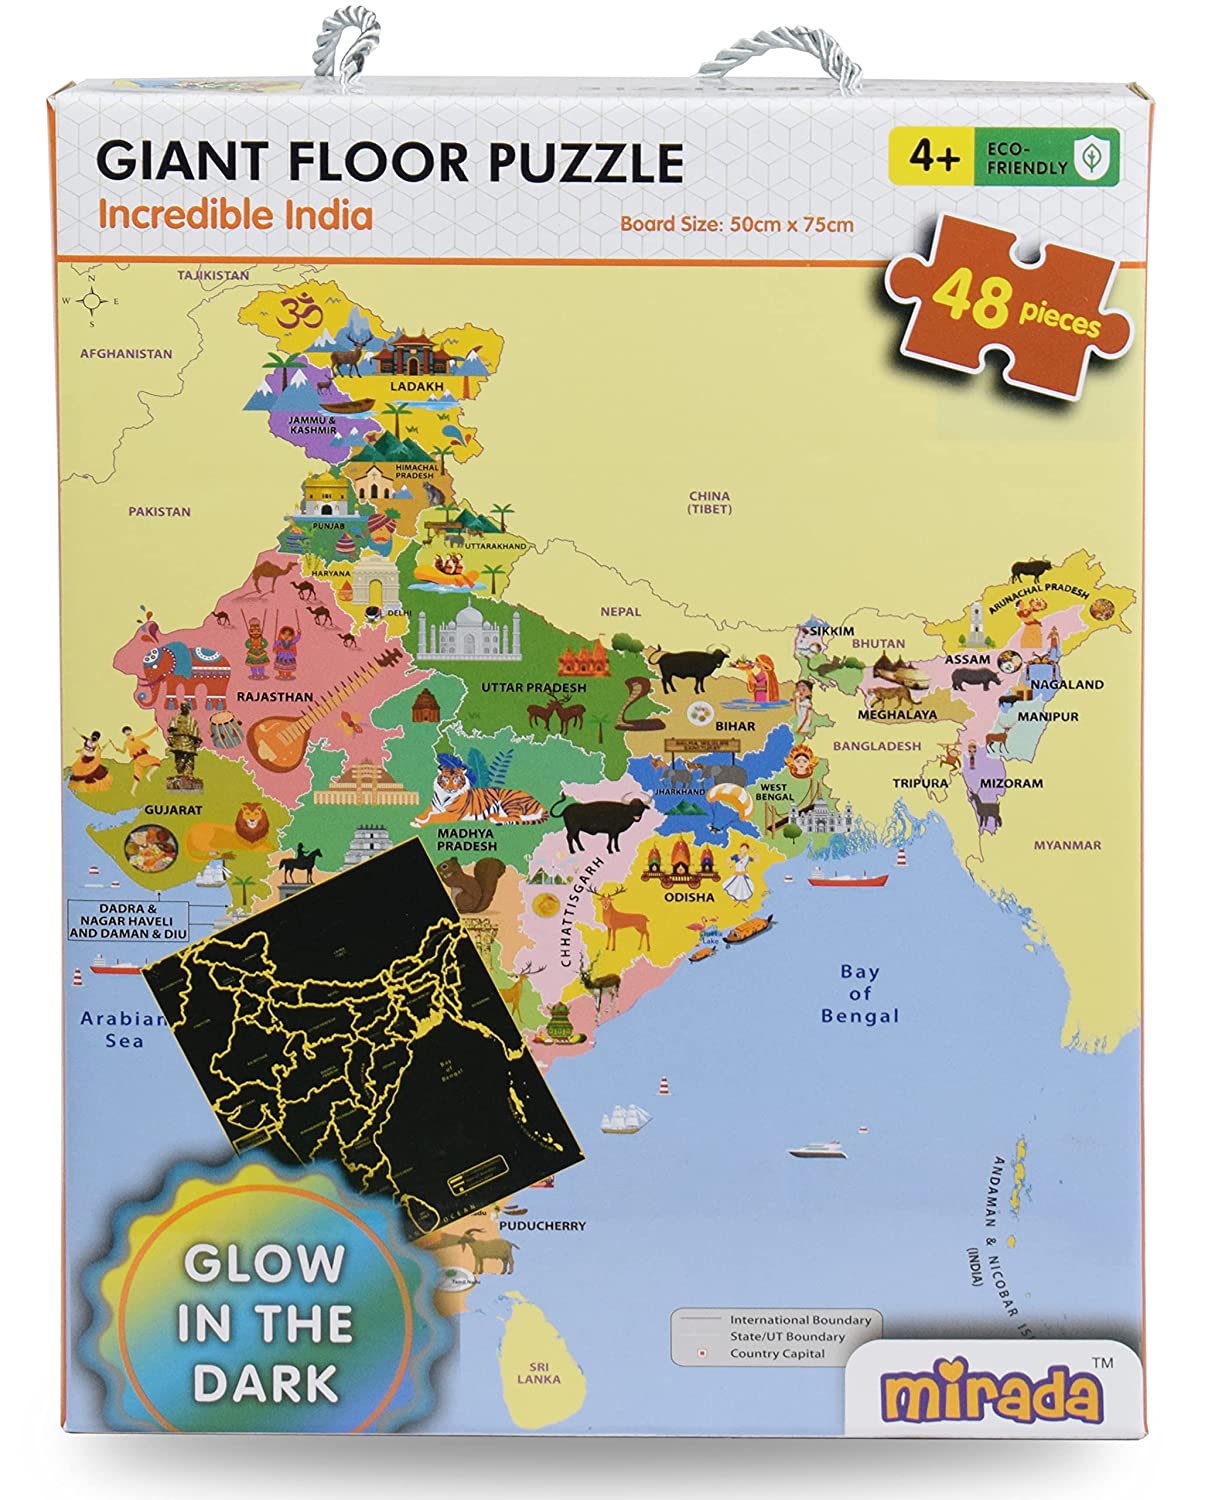 Incredible India: Giant Floor Puzzle - Glow In The Dark | Mirada by Mirada, India Puzzle